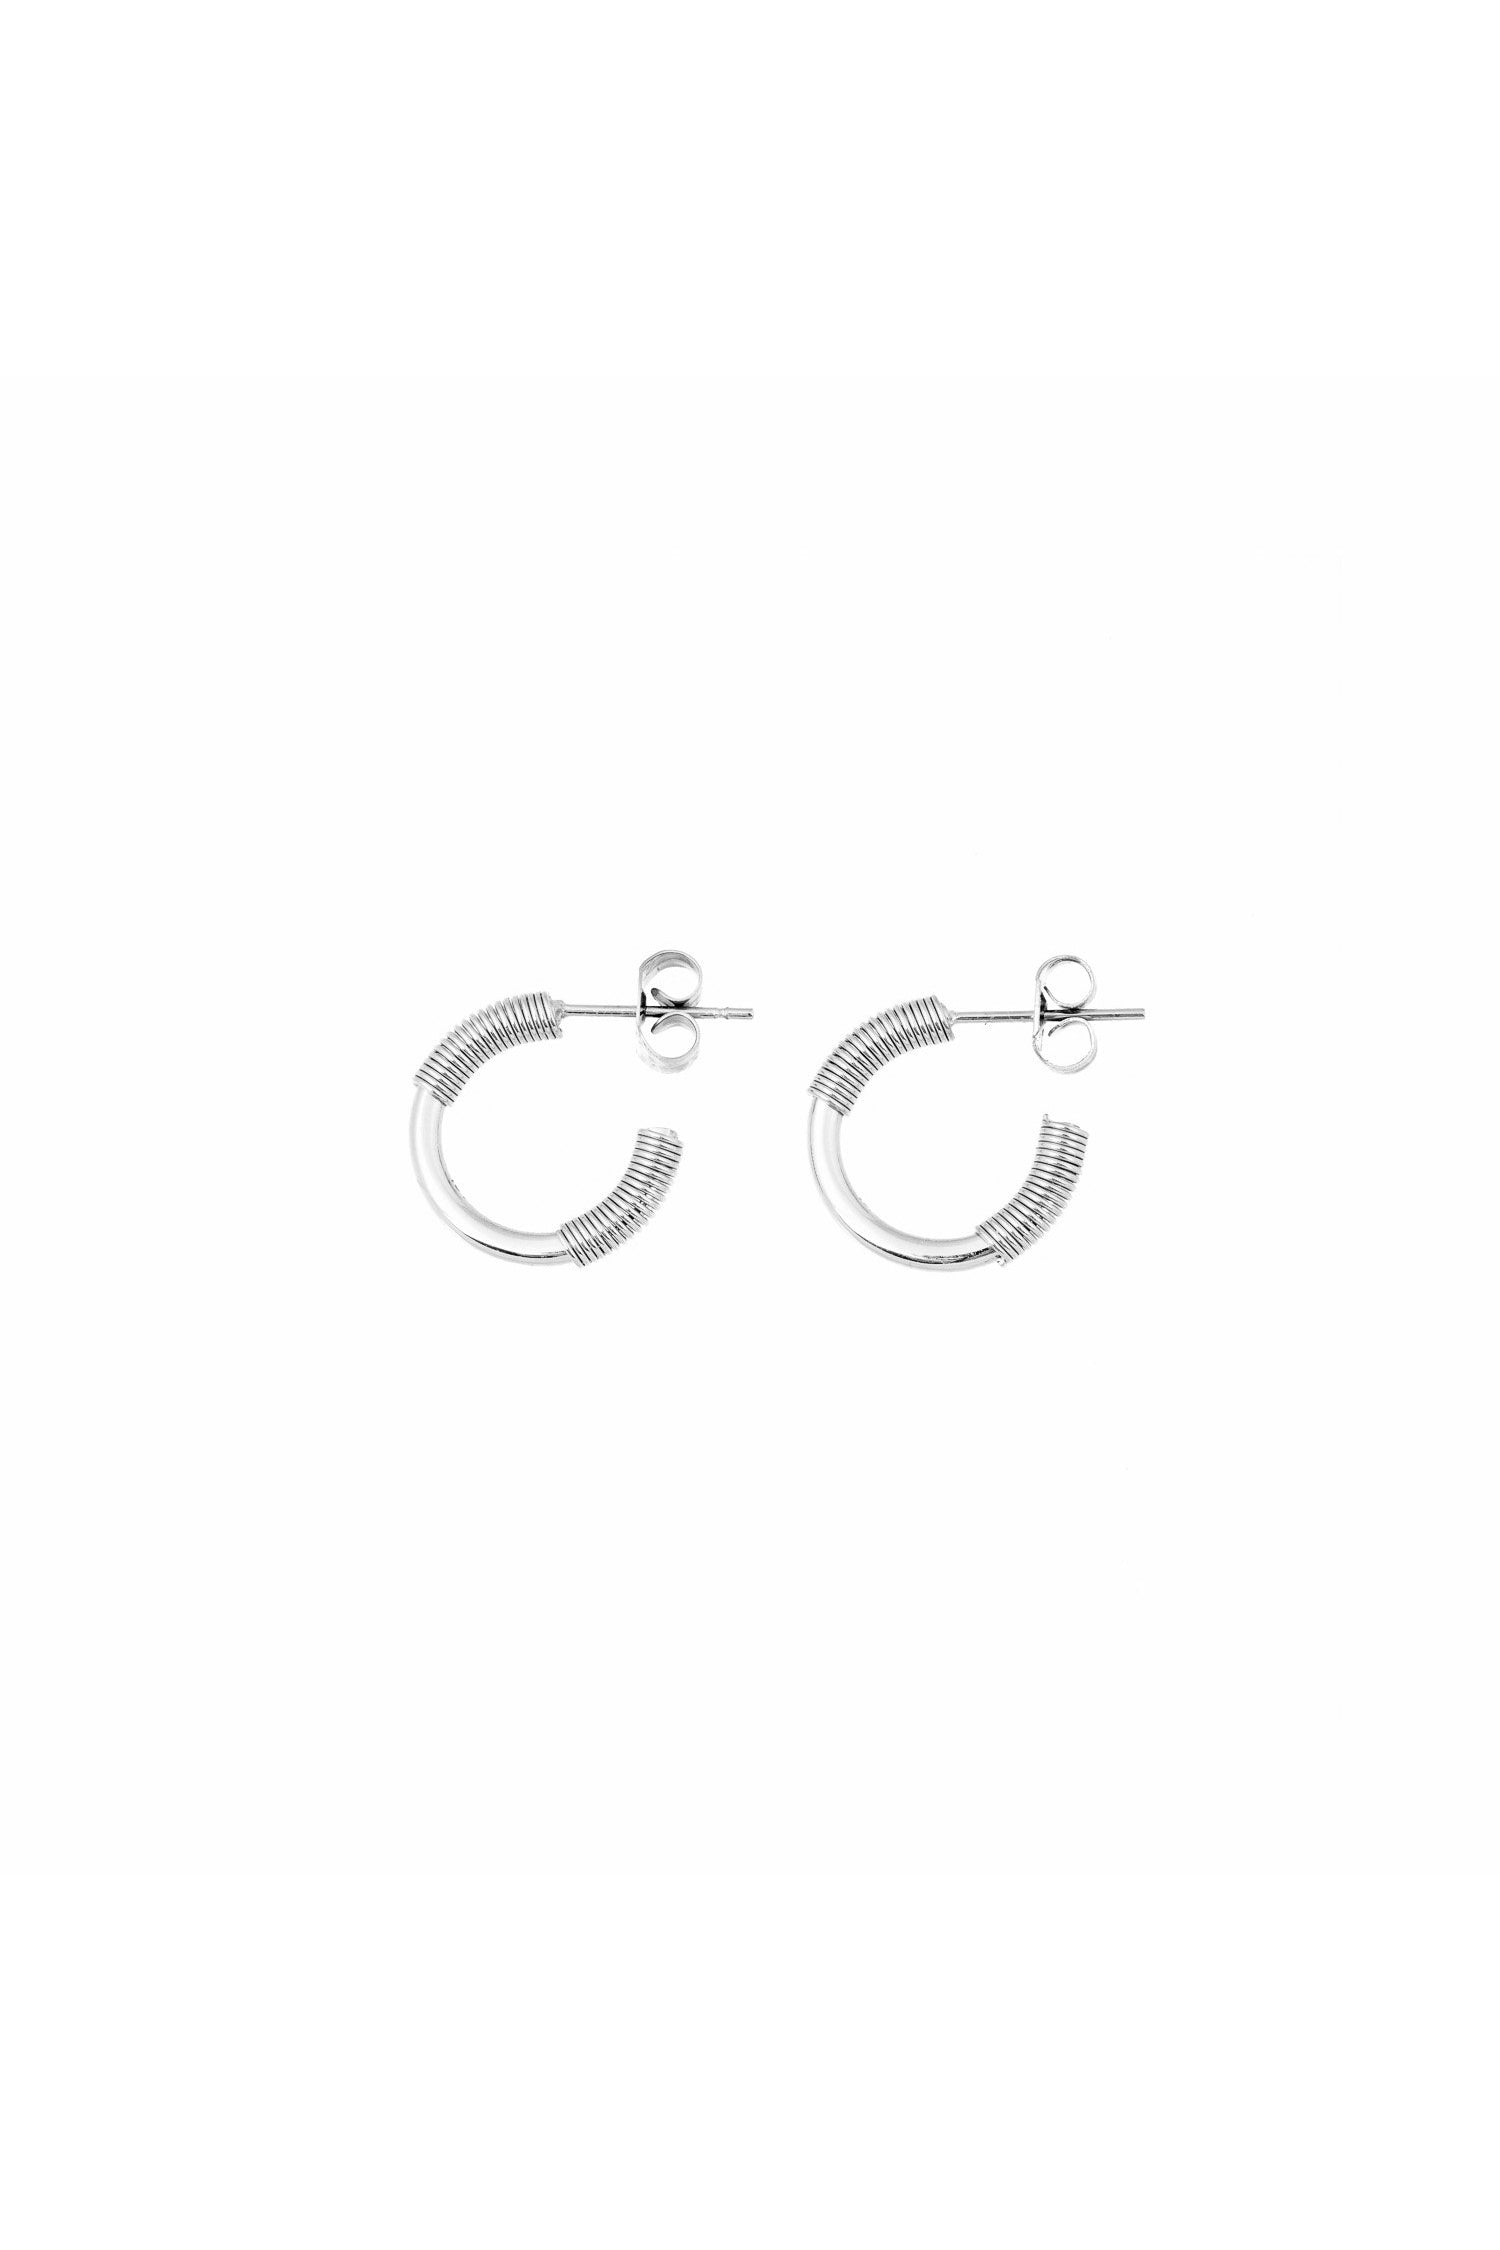 Bandhu Spiral Earrings - Silver - RUM Amsterdam